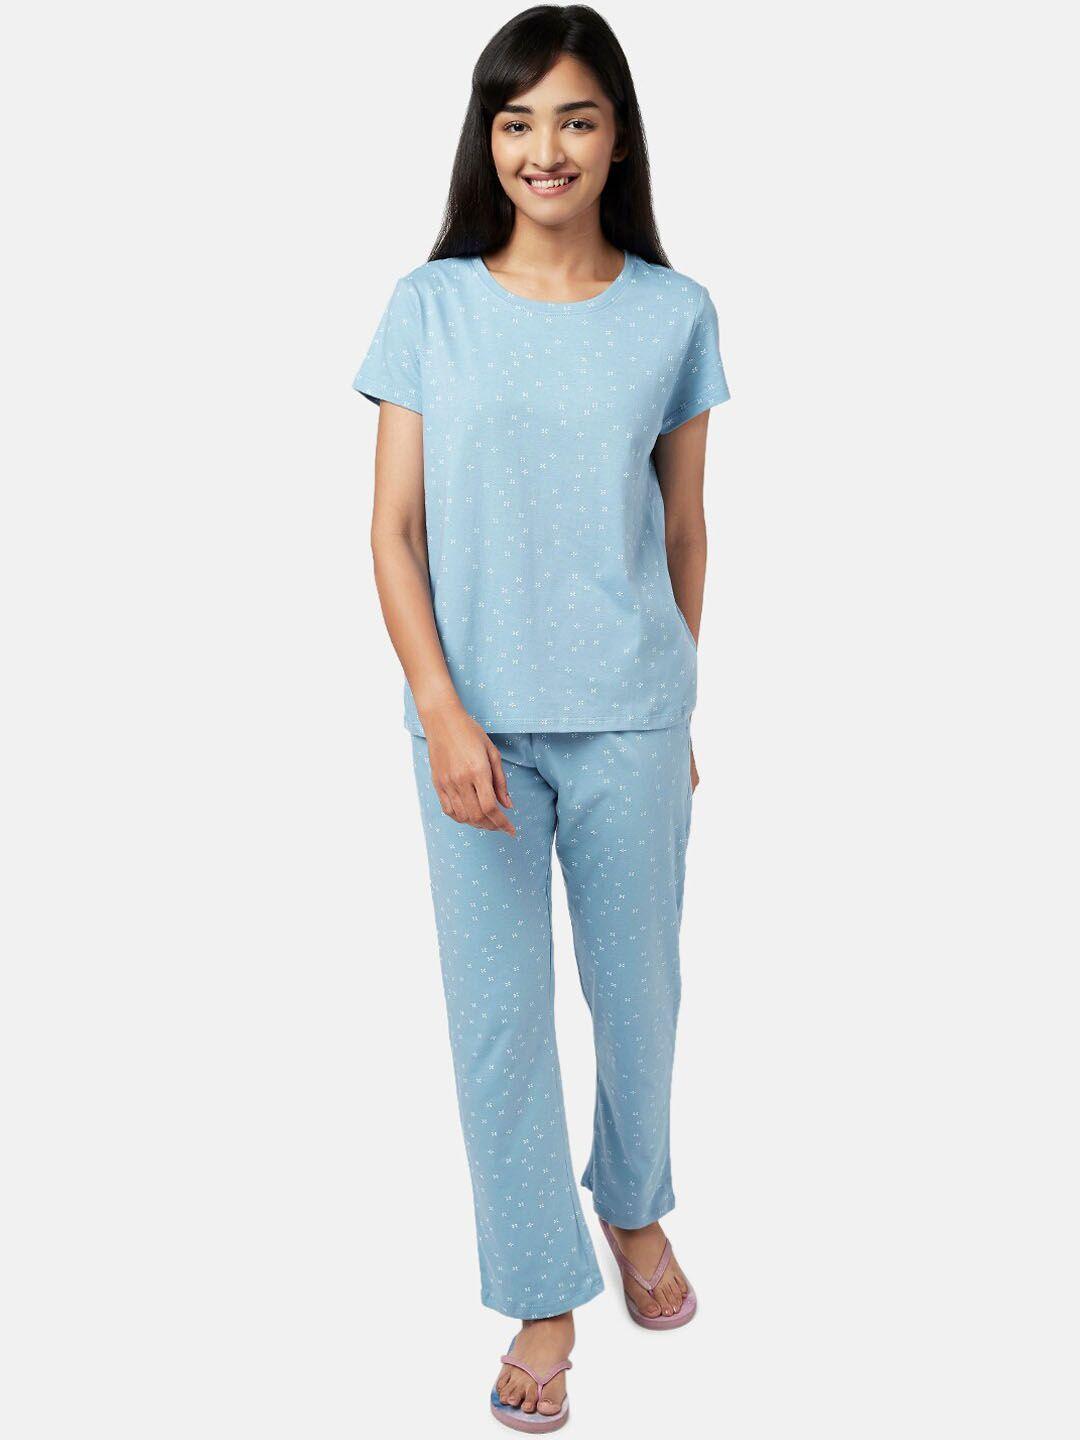 yu by pantaloons women blue & white printed night suit